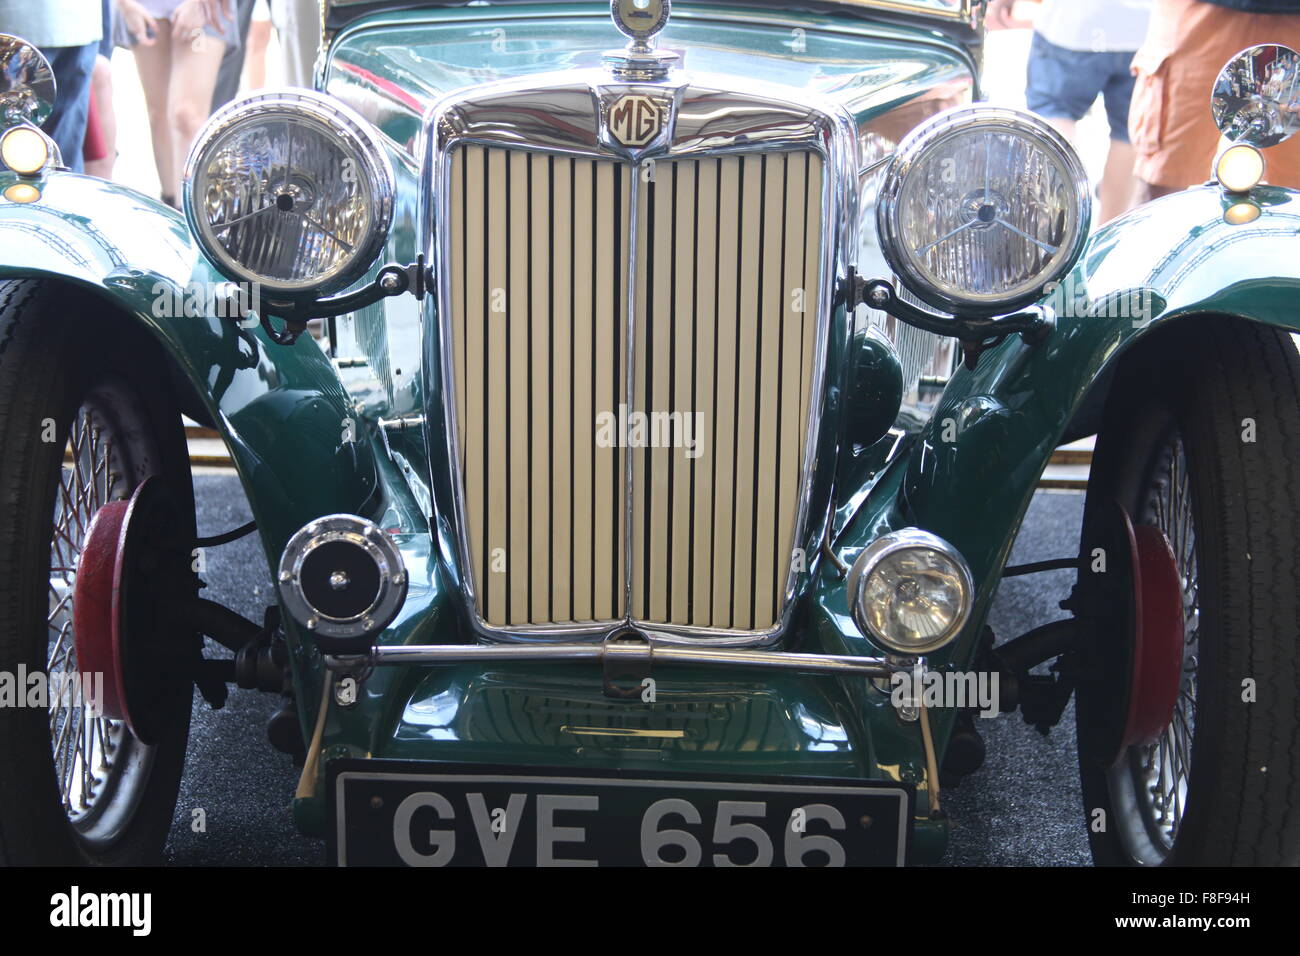 OLDTIMER AUTOMOBIL MG FRONTGRILL BILD Stockfoto